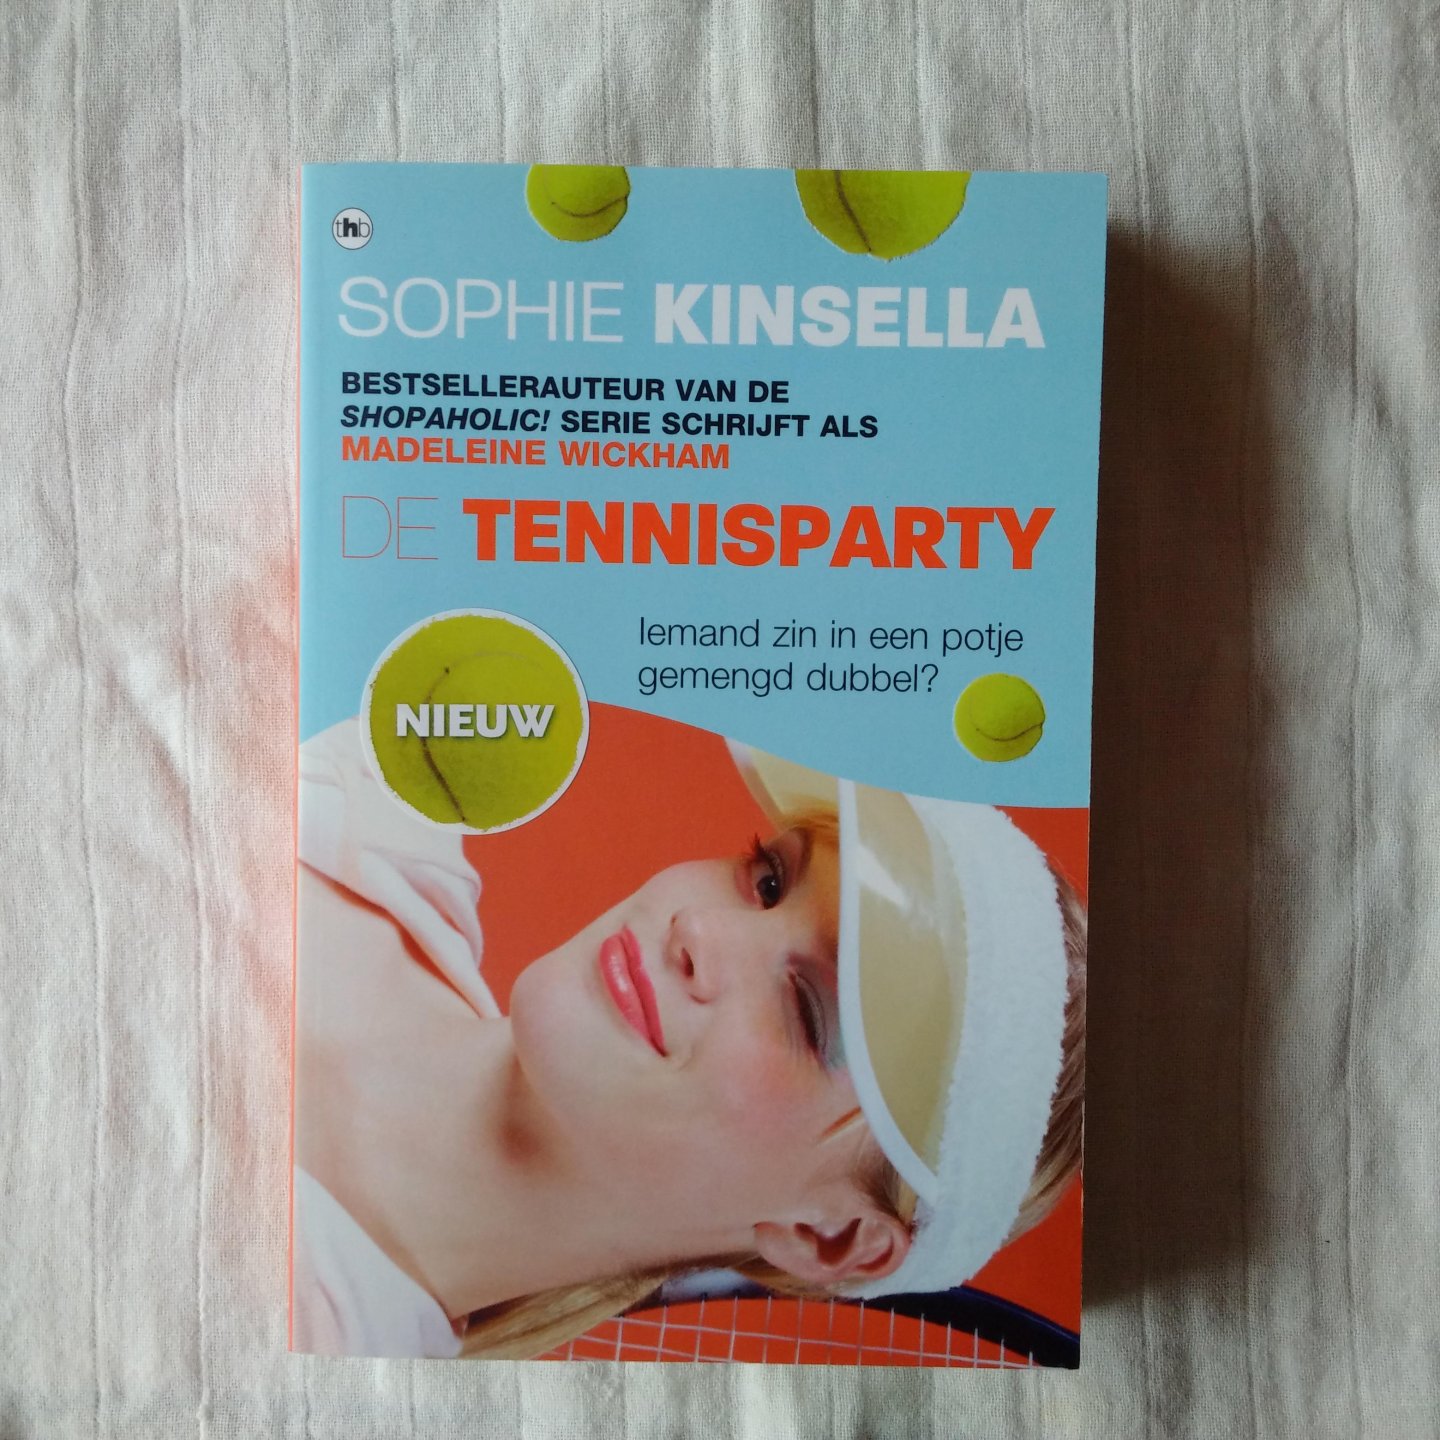 Kinsella, Sophie - Tennisparty. Iemand zin in een potje gemengd dubbel?